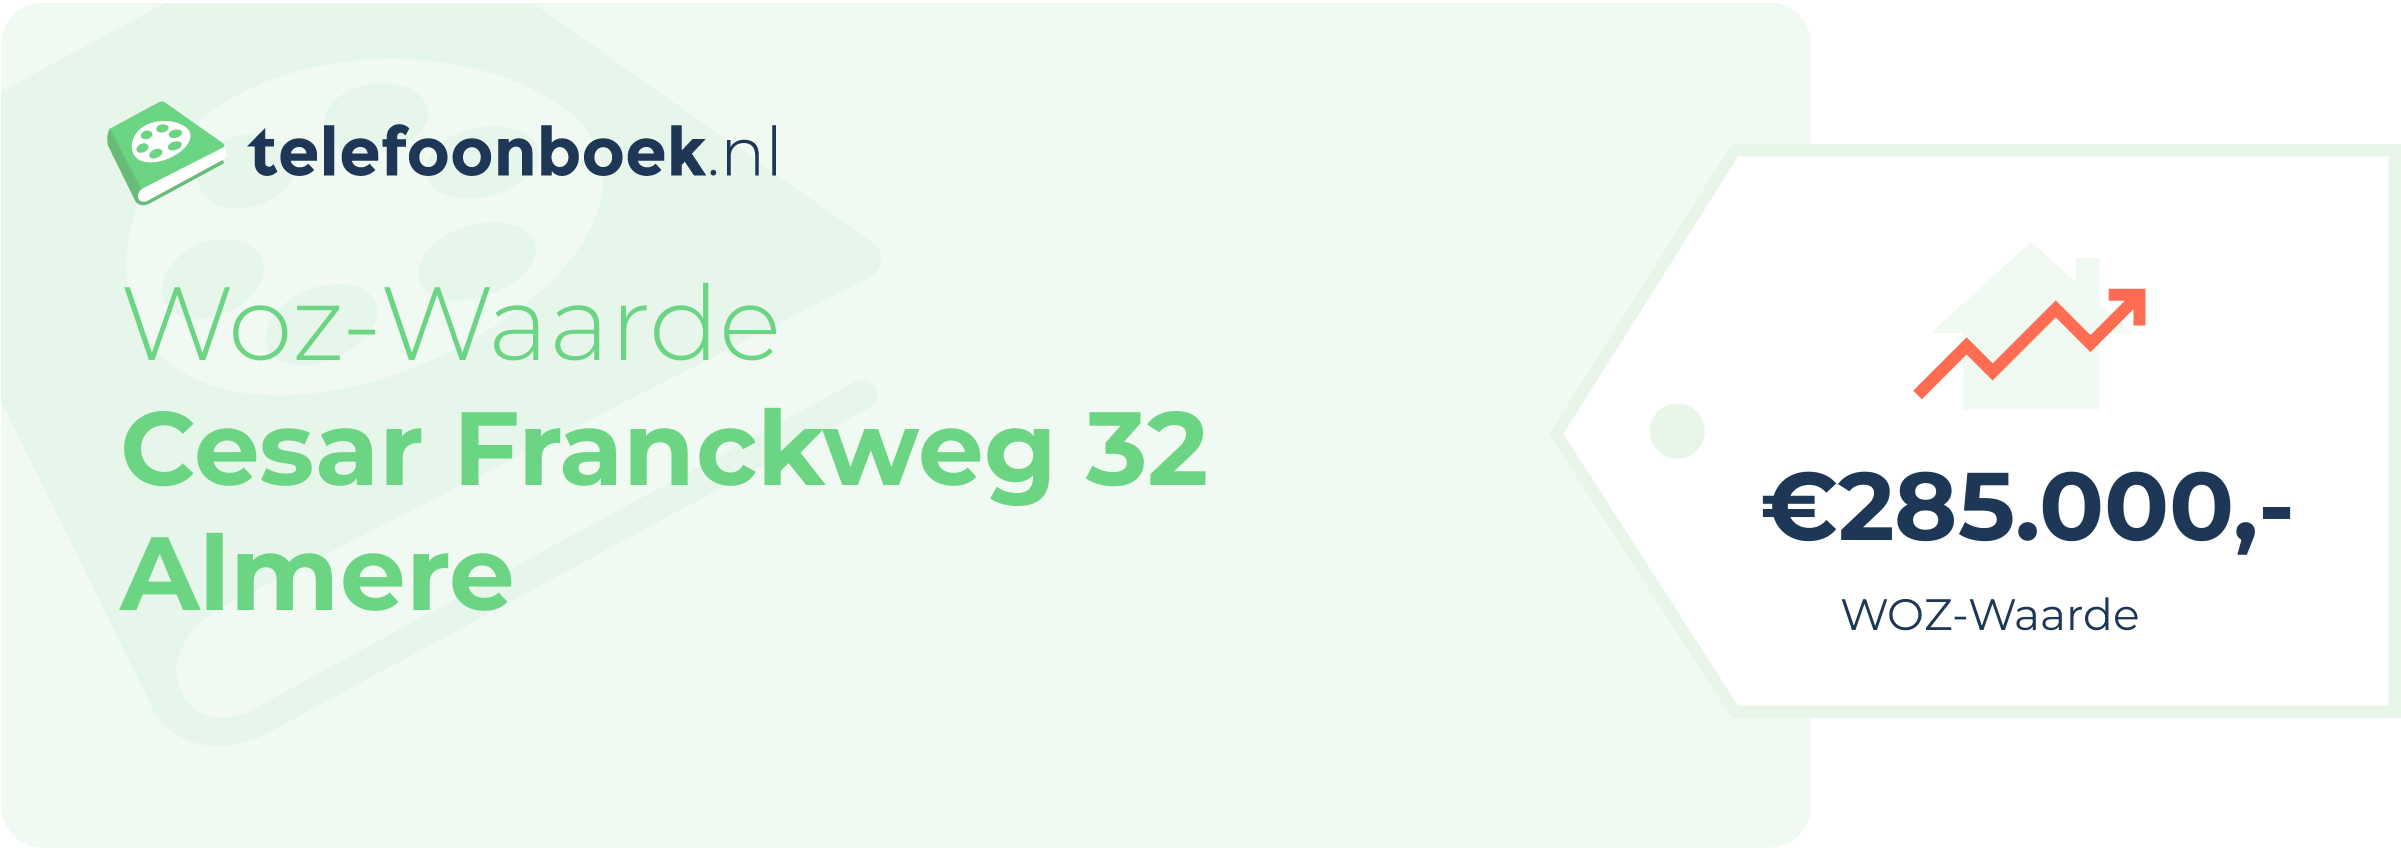 WOZ-waarde Cesar Franckweg 32 Almere